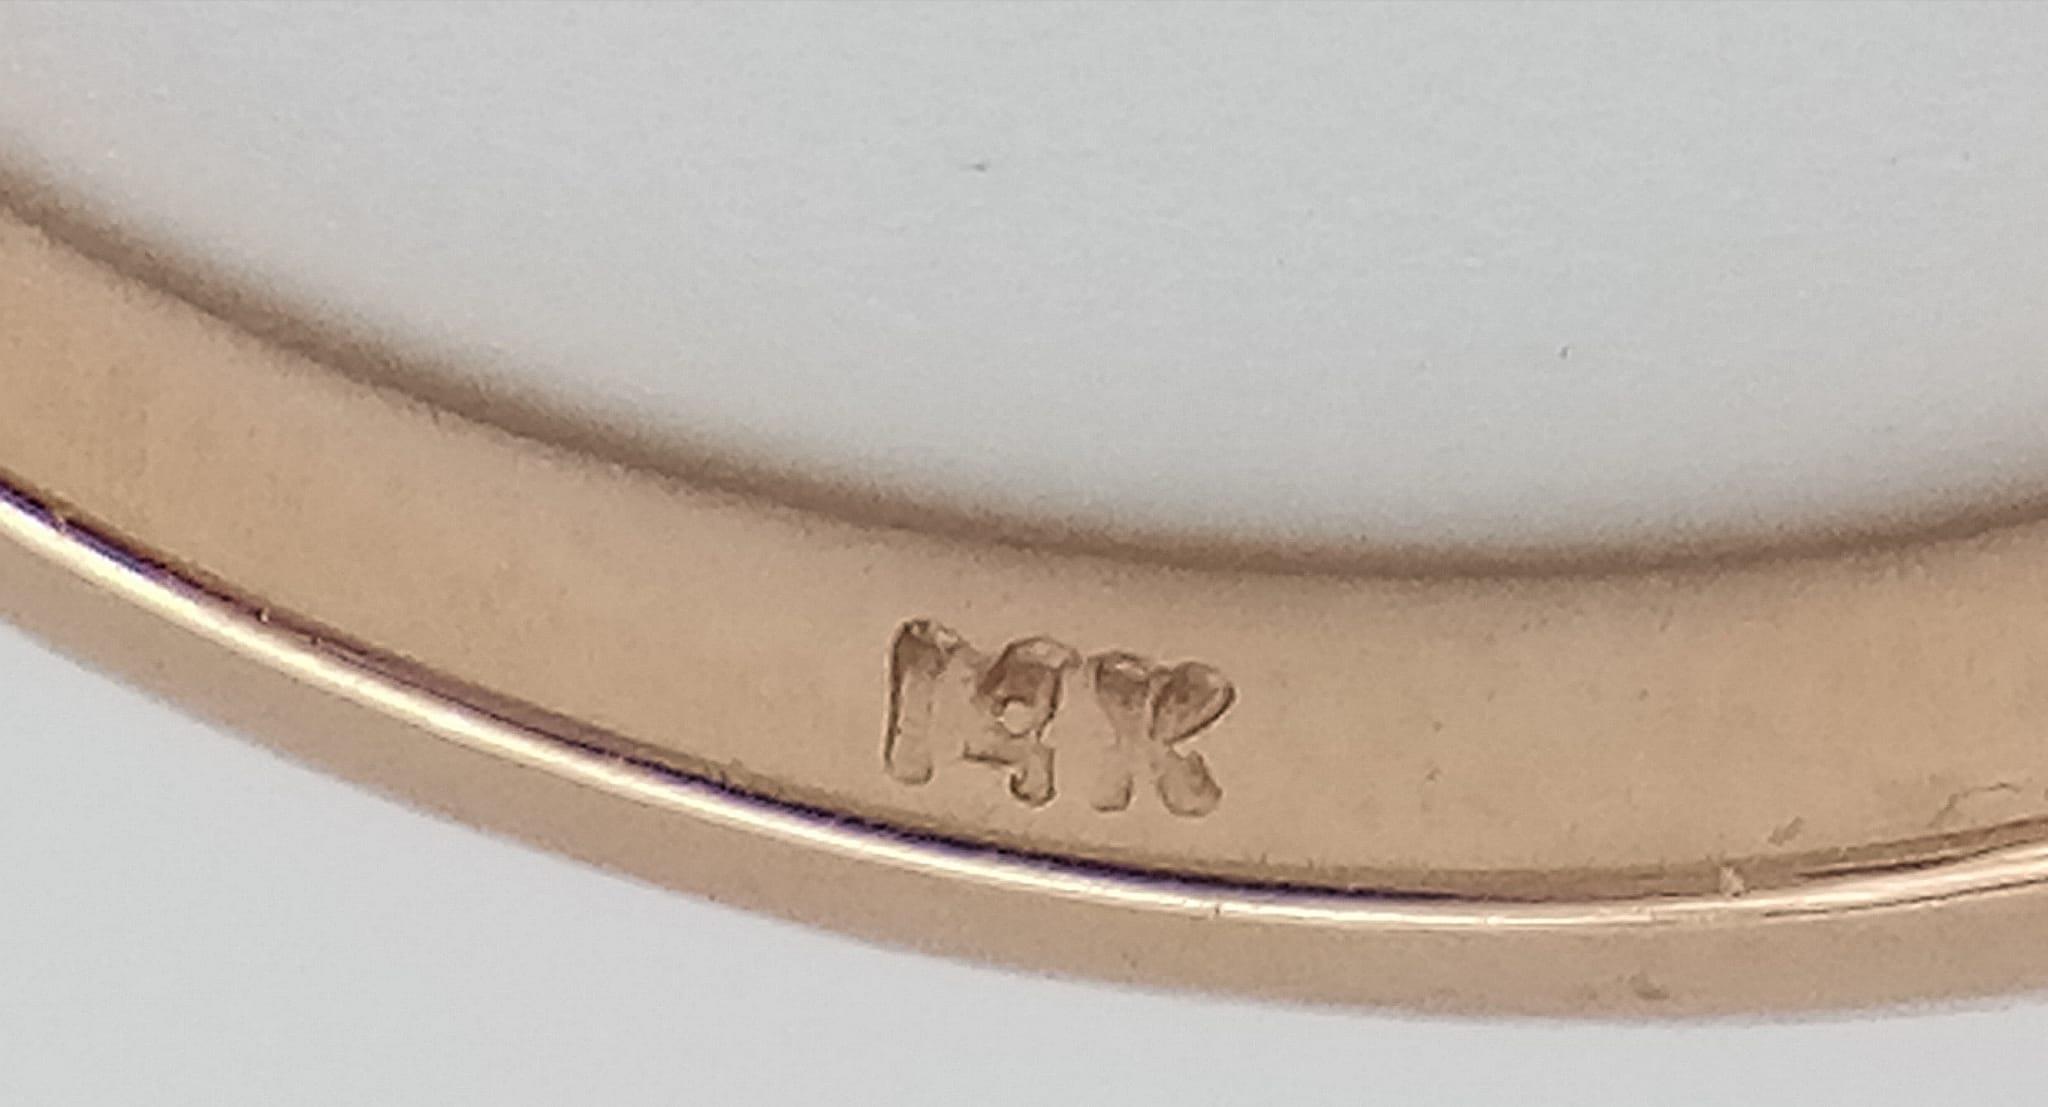 14K ROSE GOLD DIAMOND BAND RING 0.12CTW SIZE N WEIGHT: 2.1G - Image 4 of 4